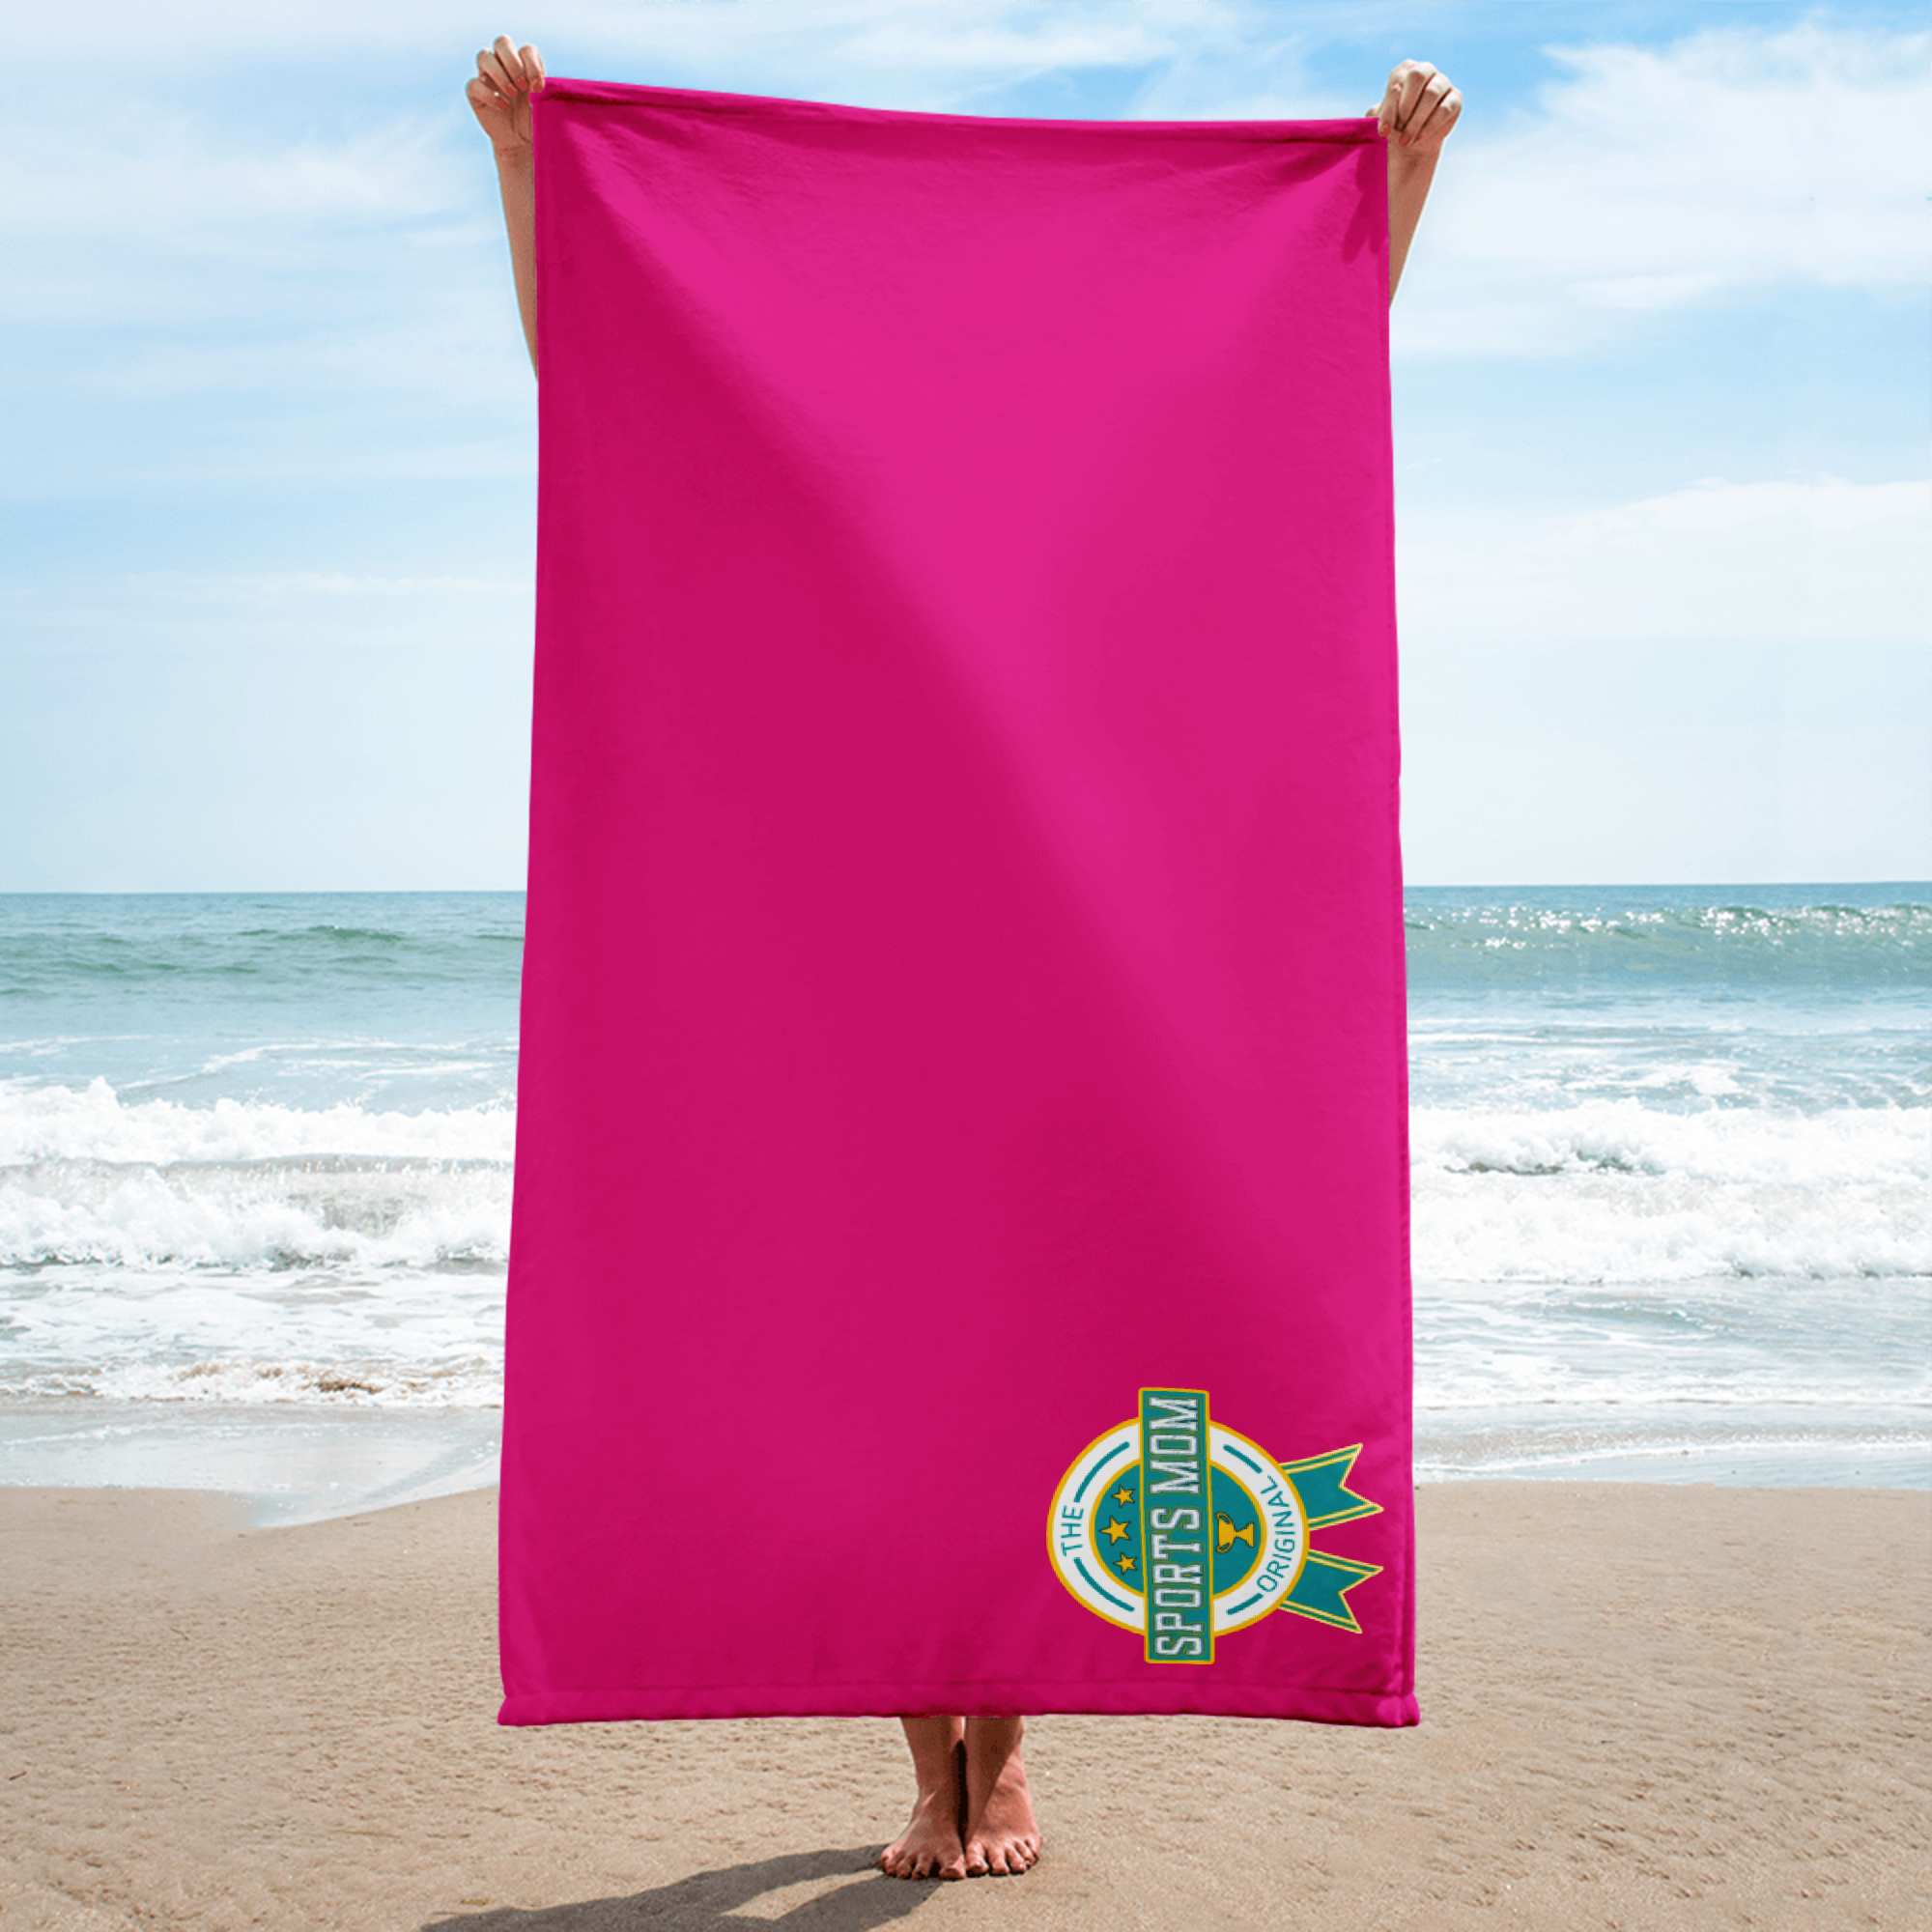 OSM MASSIVE Towel - Vibrant Pink